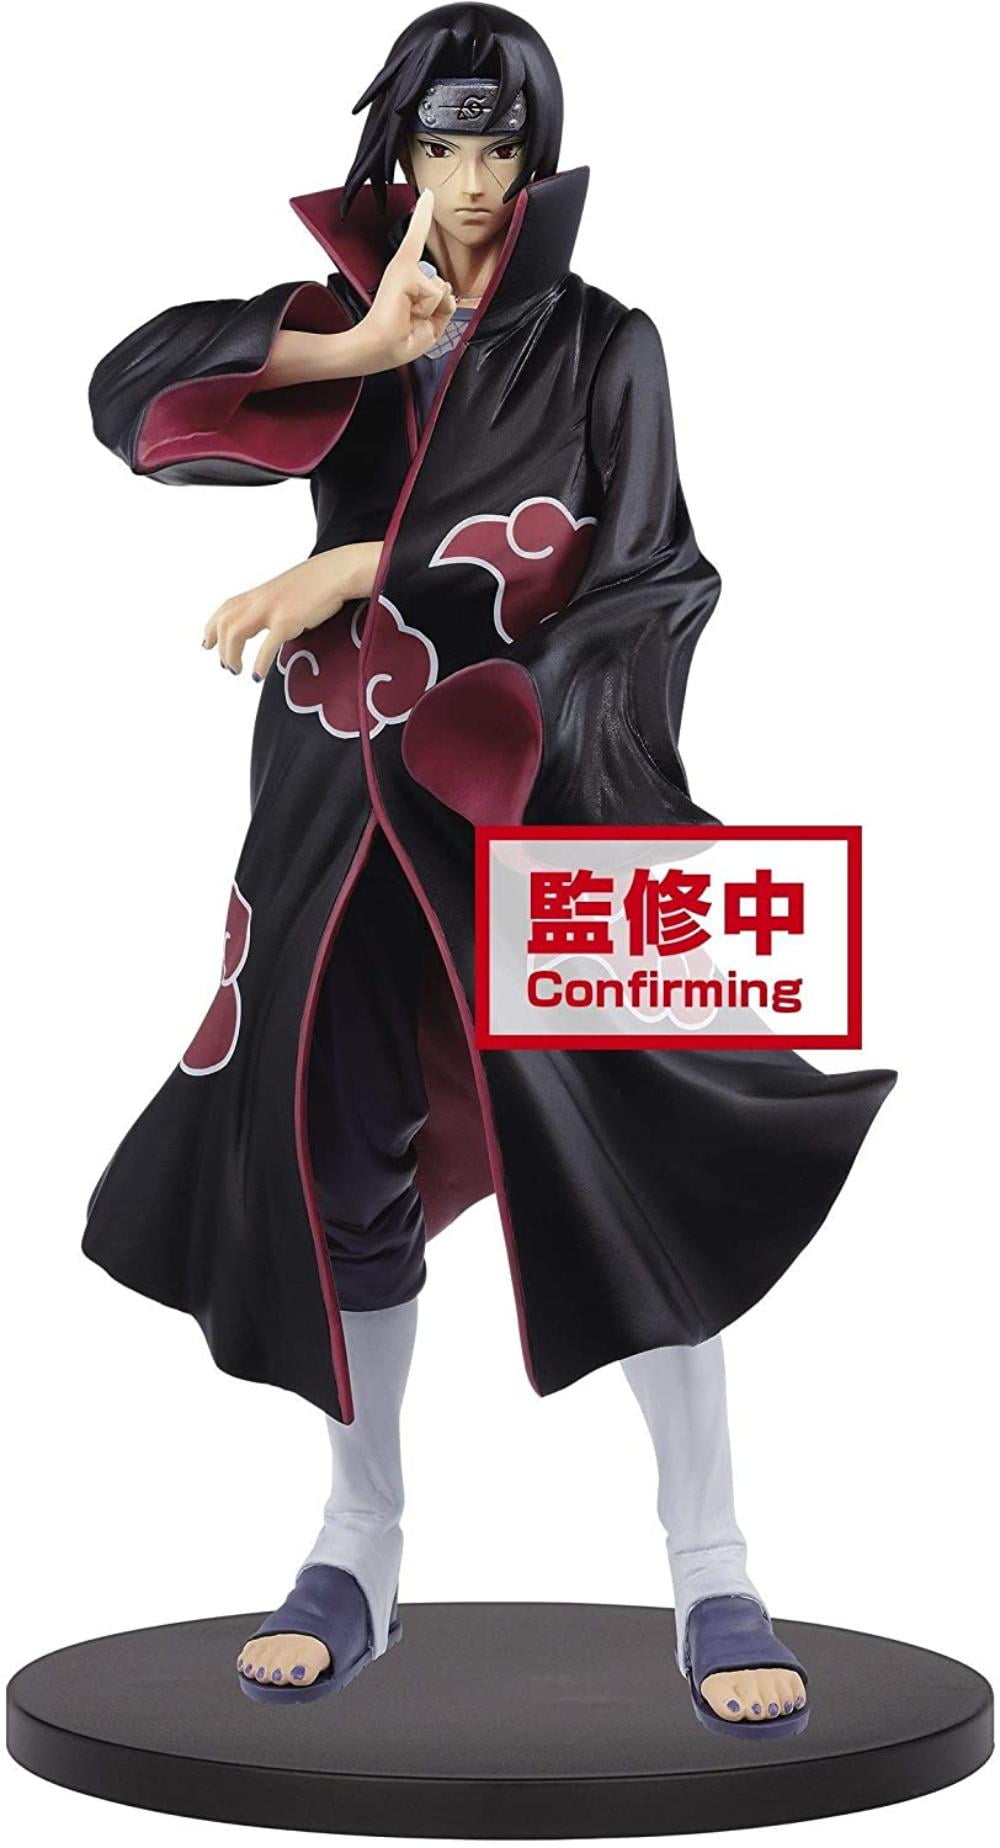 Details about   Anime Uchiha Sasuke Uchiha Itachi Figure Character Model Ornament Christmas Gift 